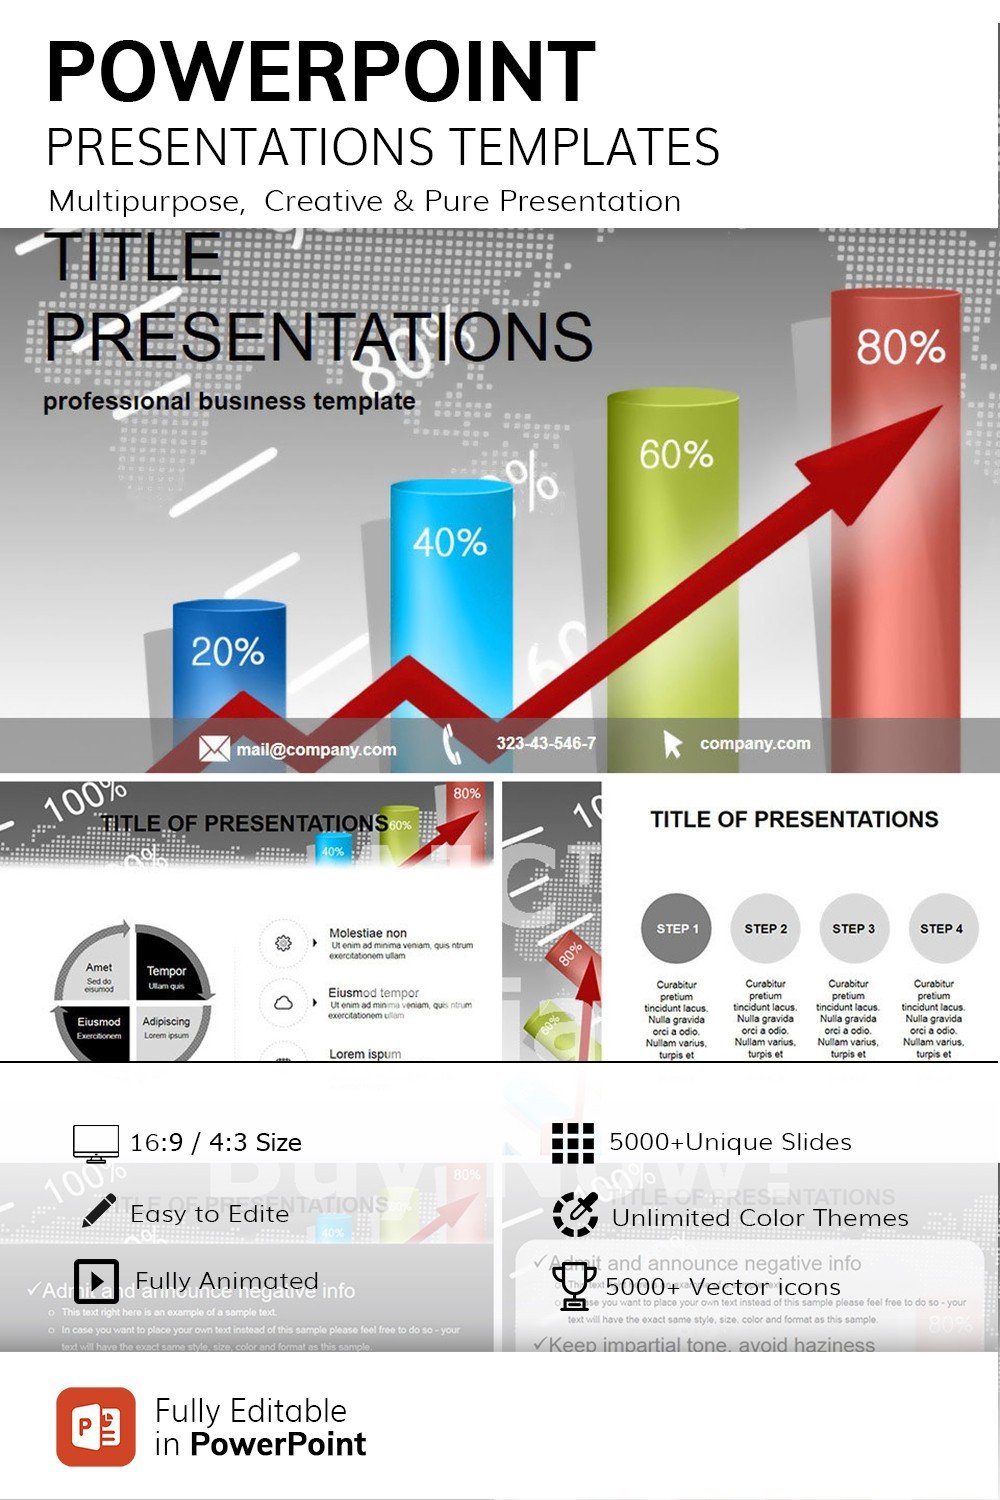 Stock market analysis PowerPoint template | ImagineLayout.com